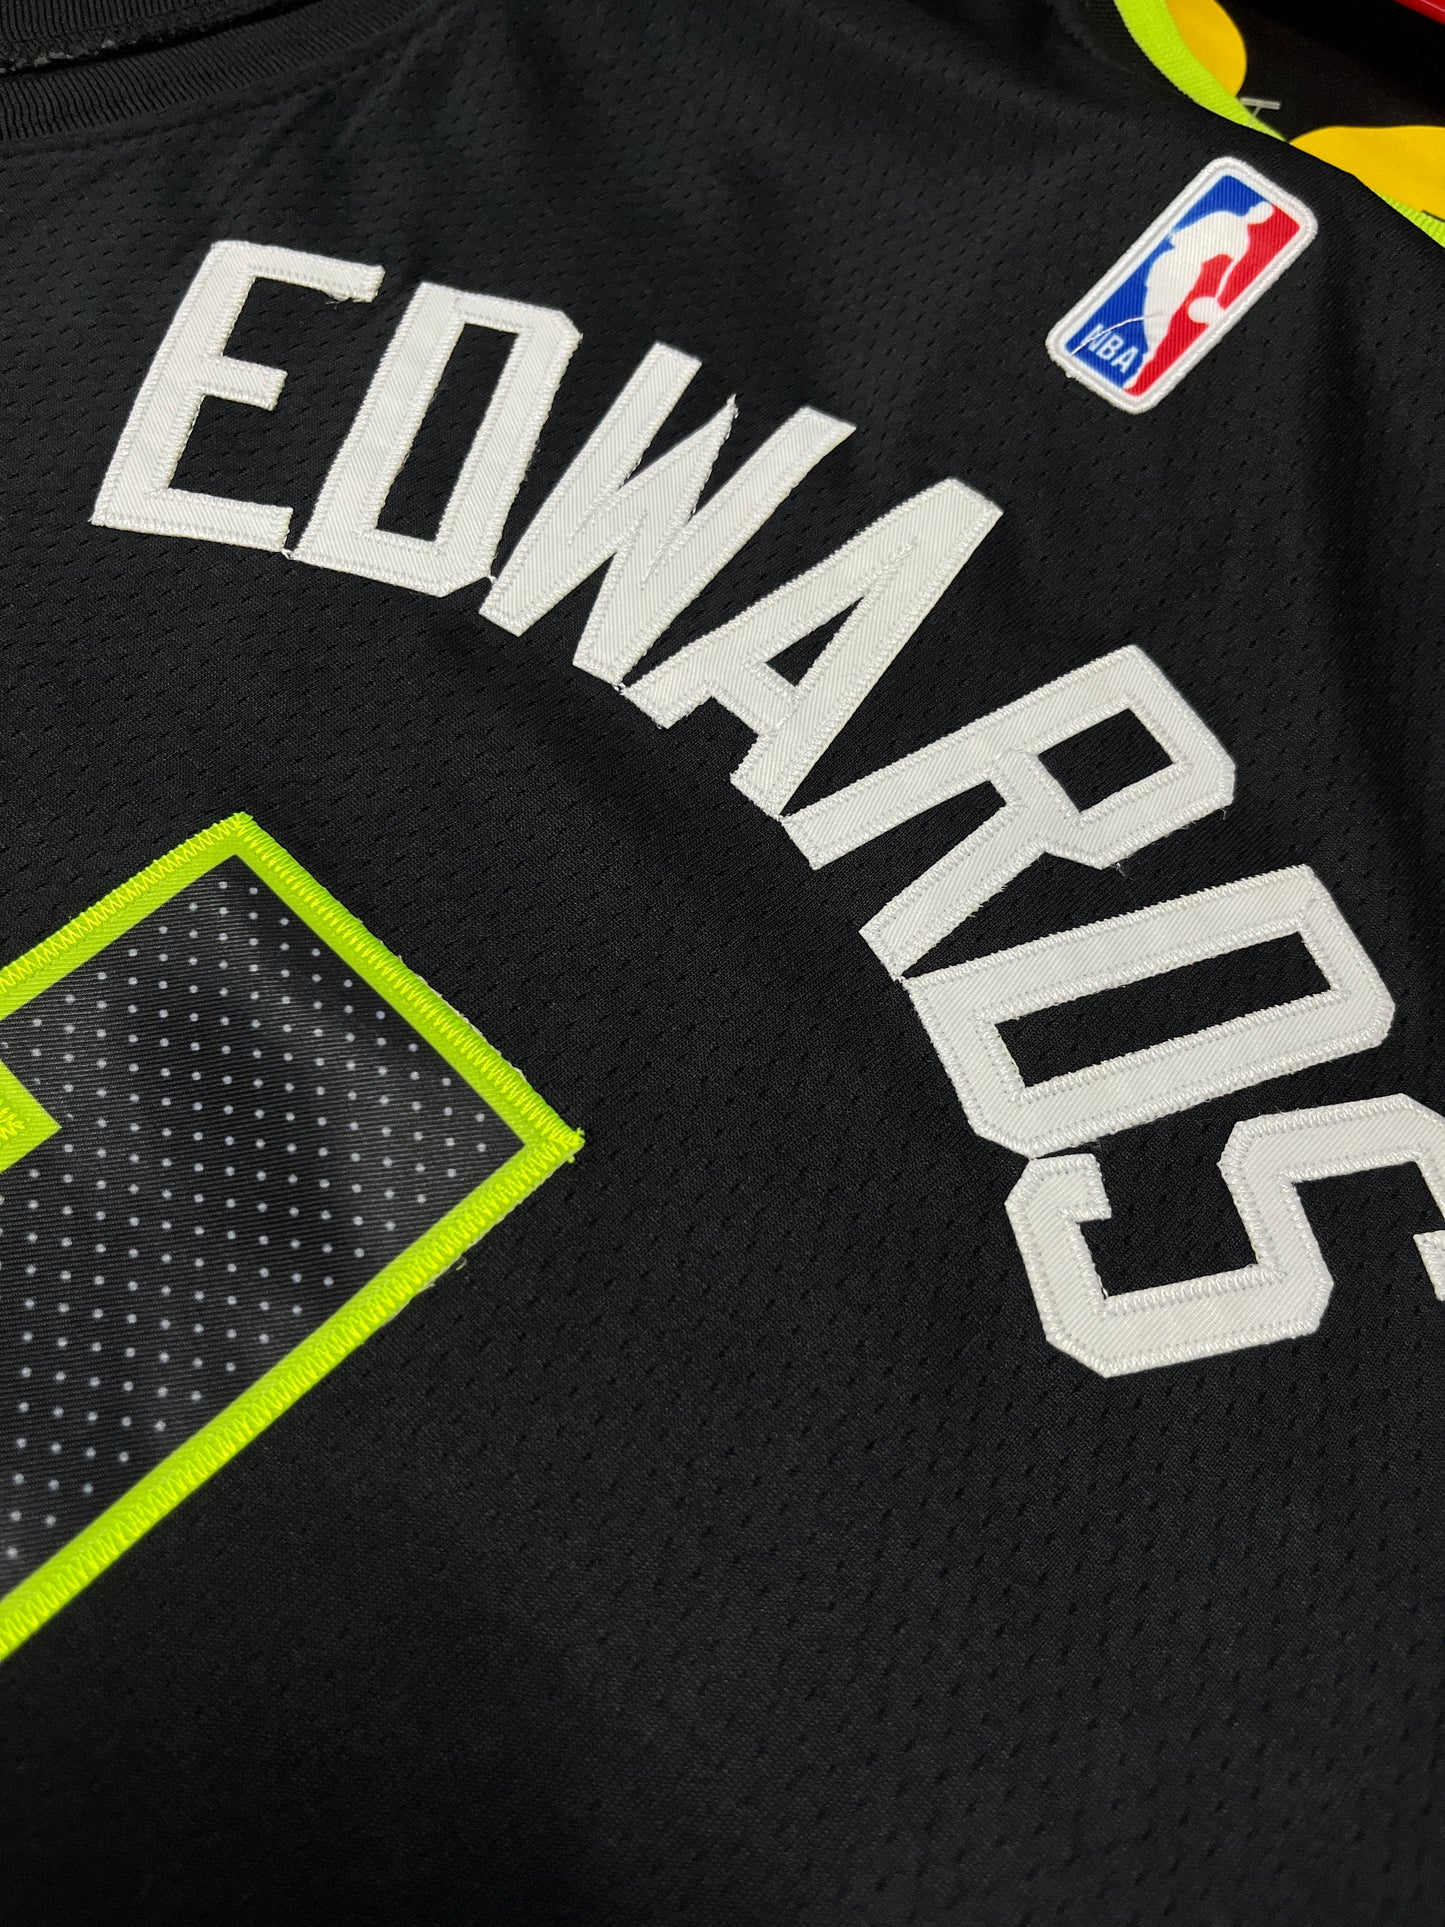 EDWARDS 1 Black Minnesota Timberwolves NBA Jersey